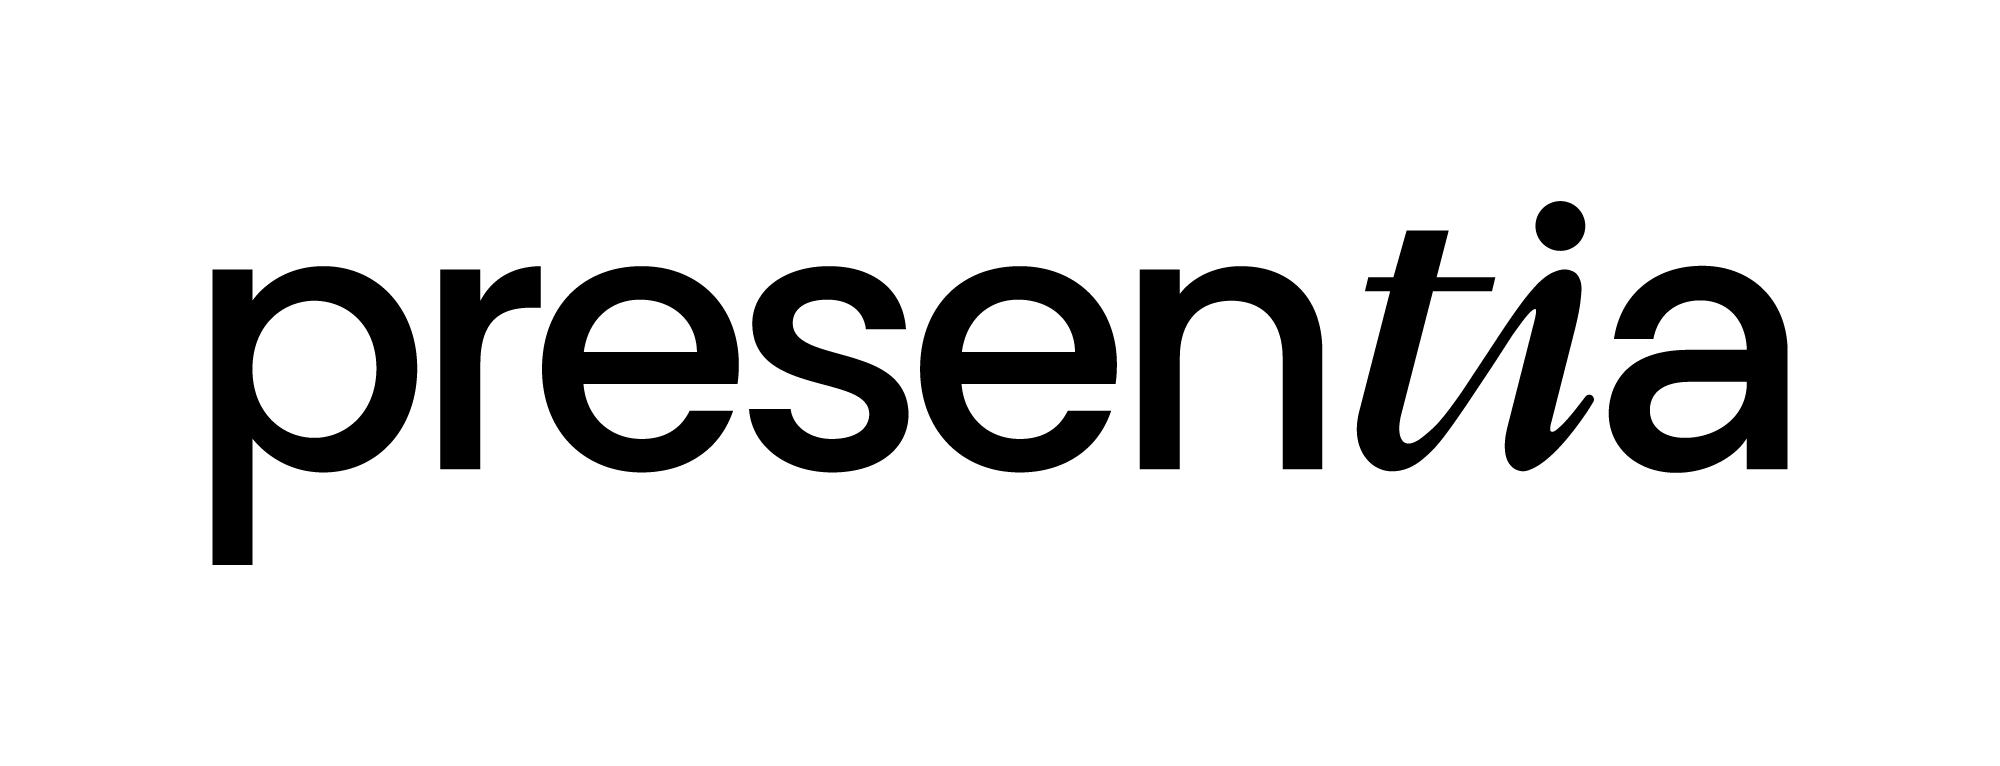 Presentia Oy:n logo mustavalkoisena